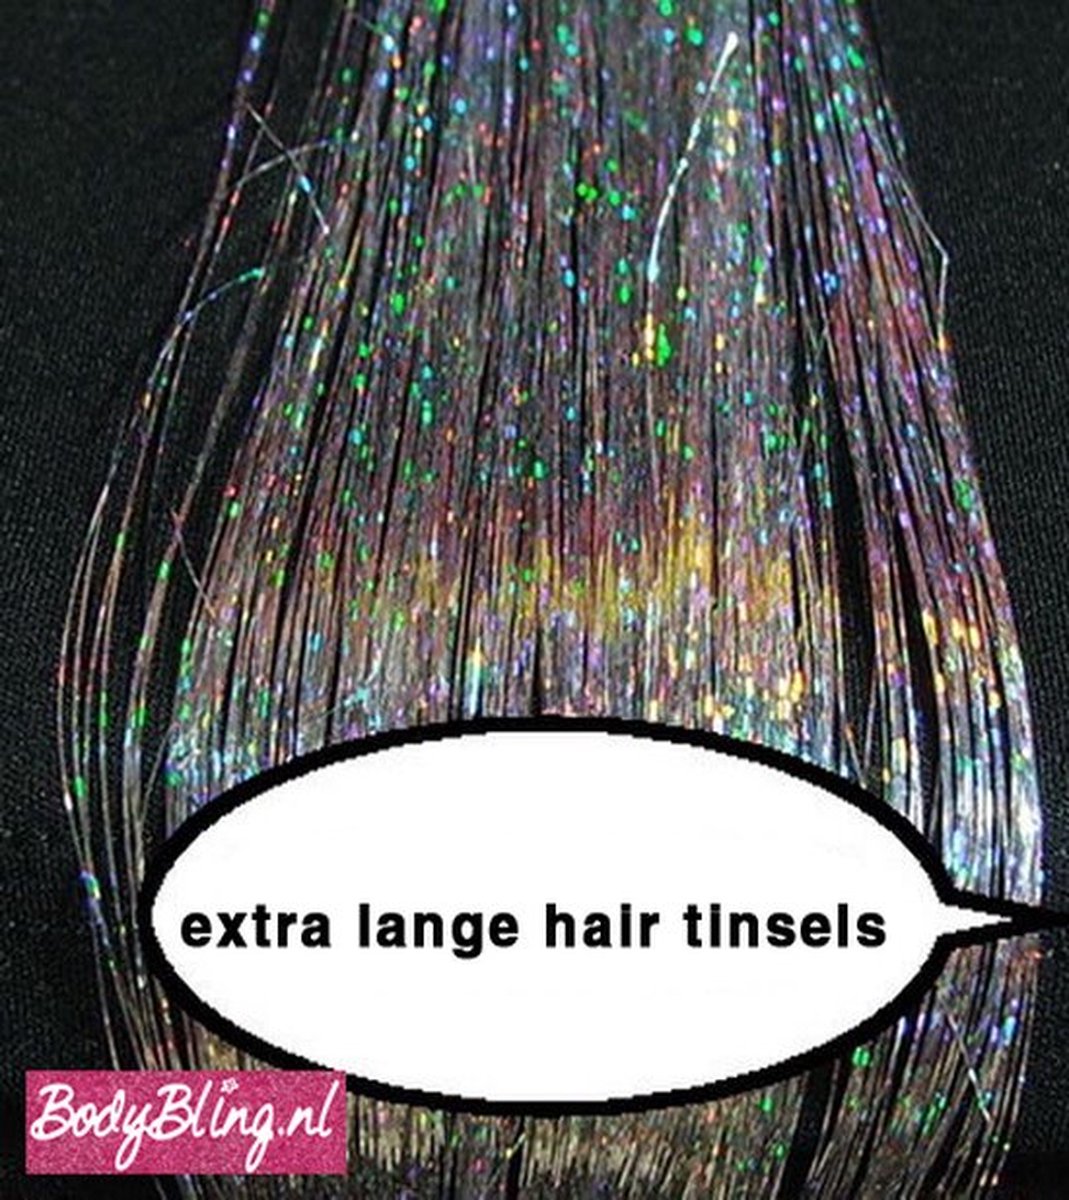 Daviva Hair Tinsels Sparkling zilver - glitter hairextensions - 240 stuks